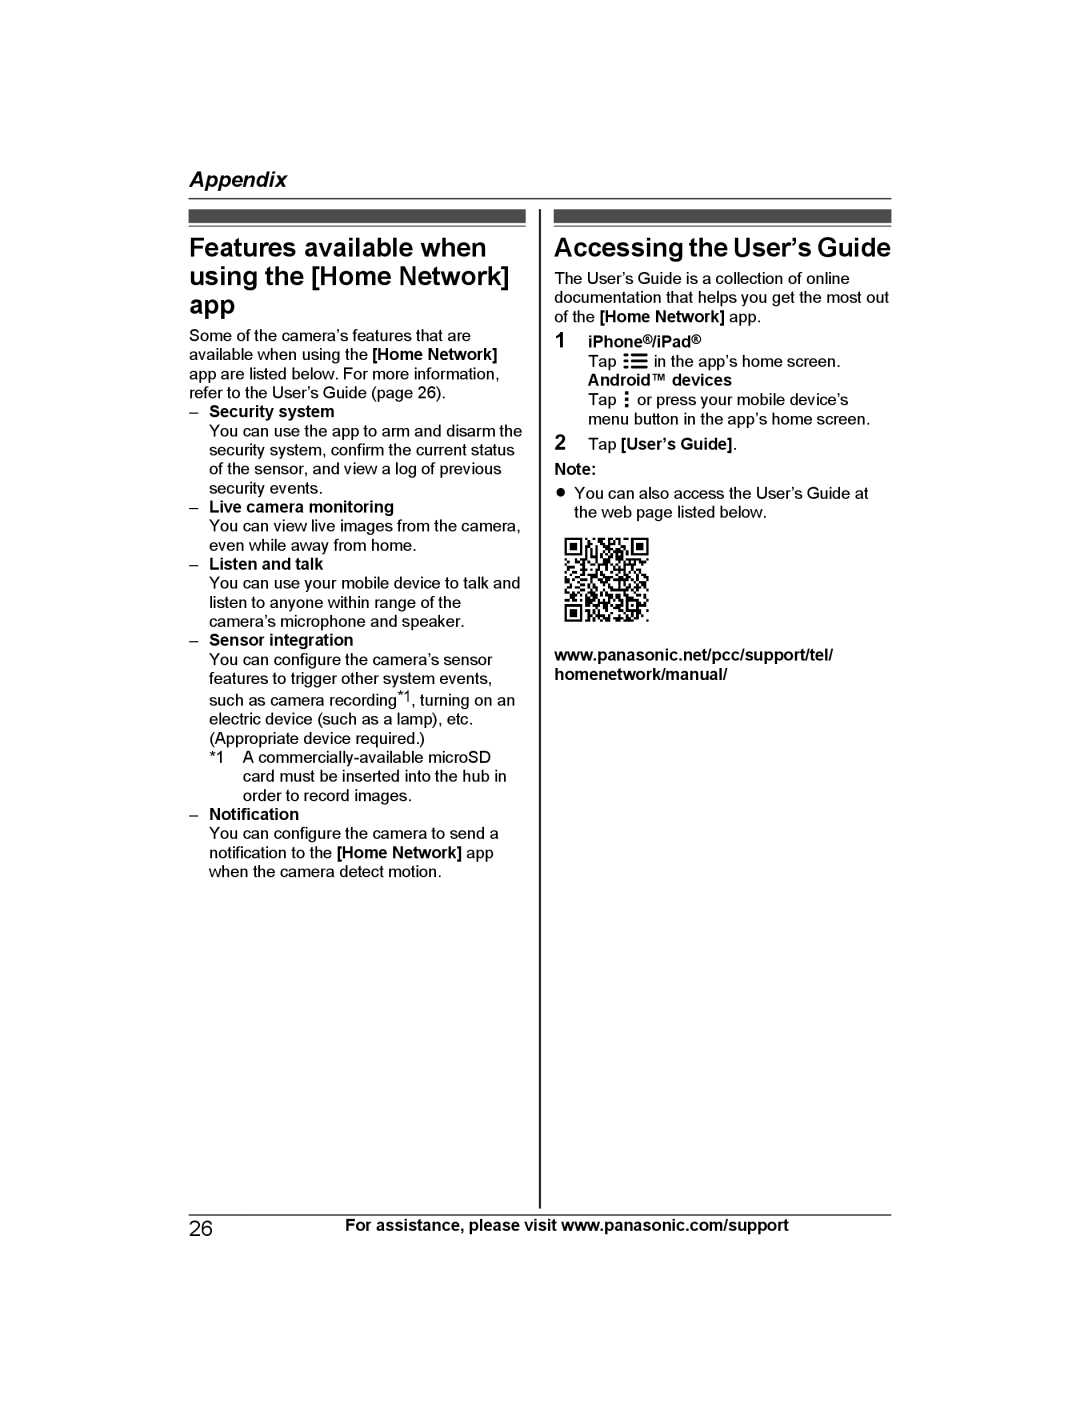 Panasonic KX-HNC600 manual Accessing the User’s Guide, Appendix 